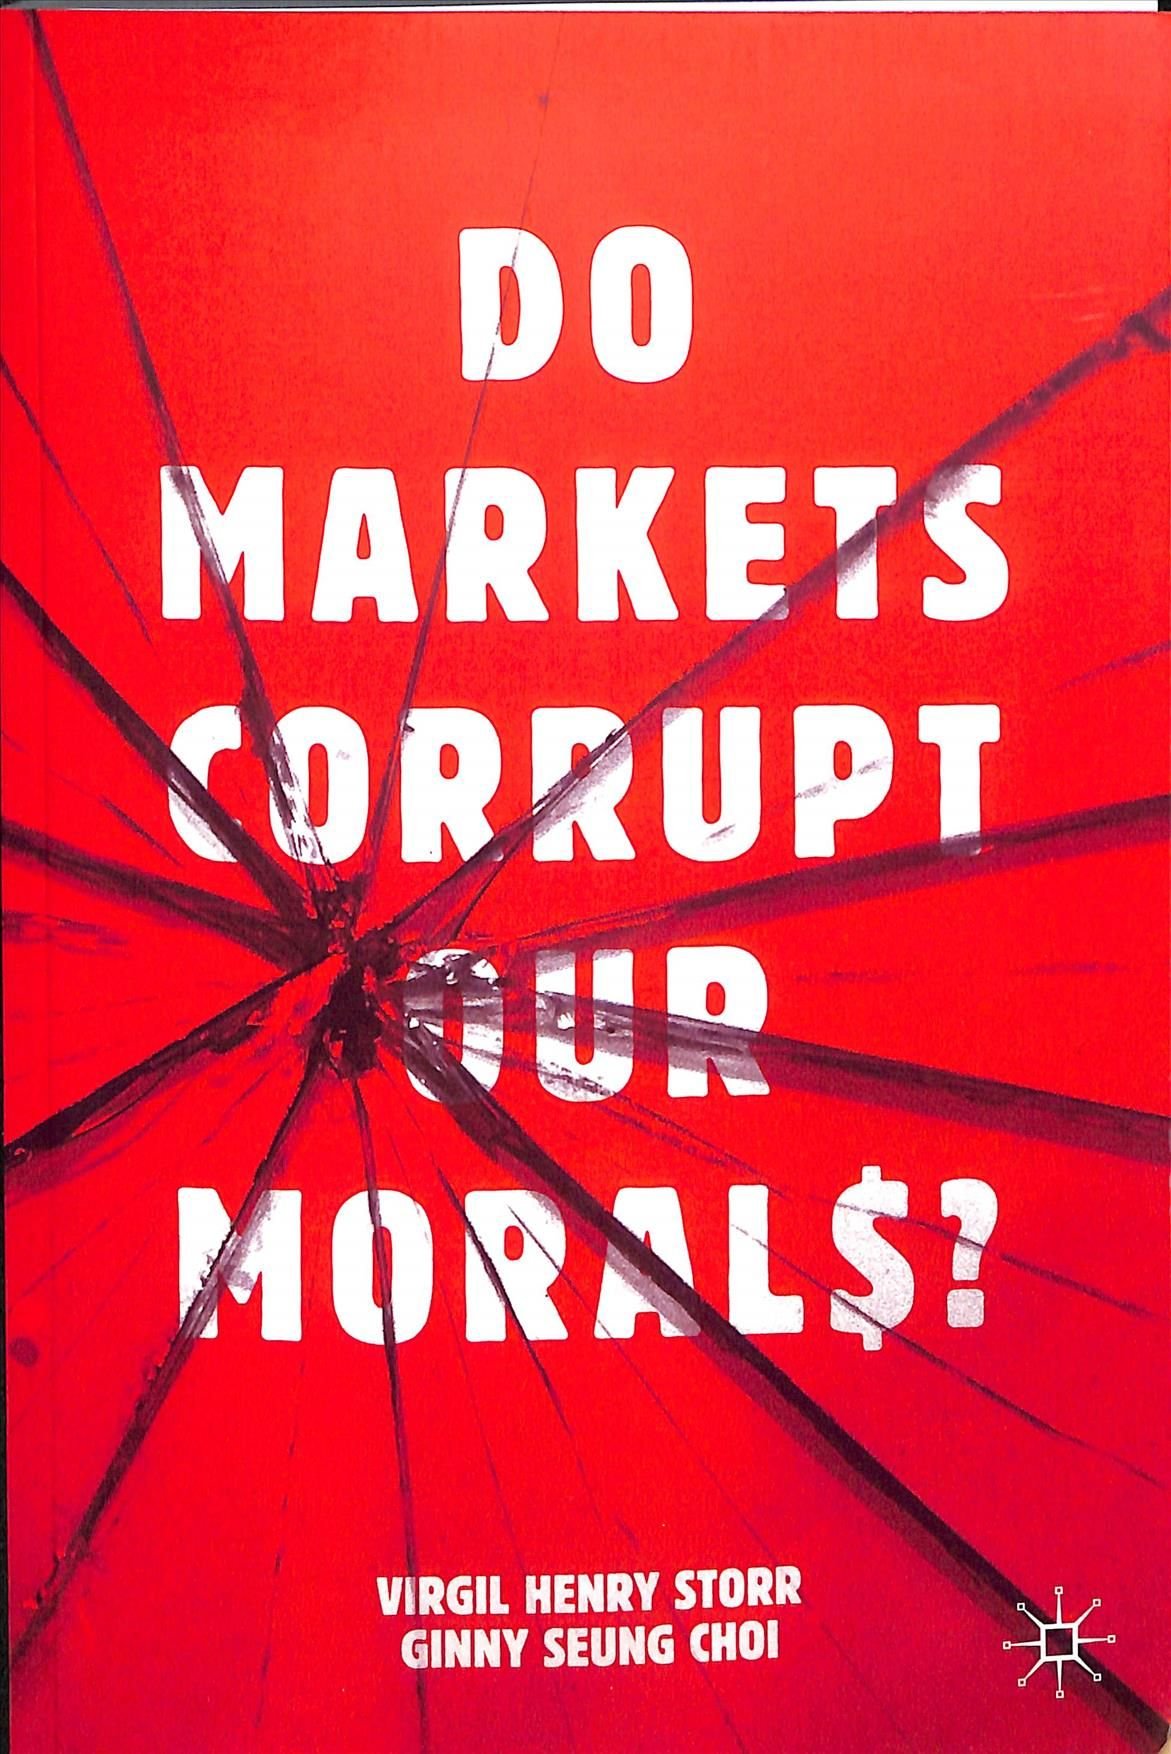 Do Markets Corrupt Our Morals?